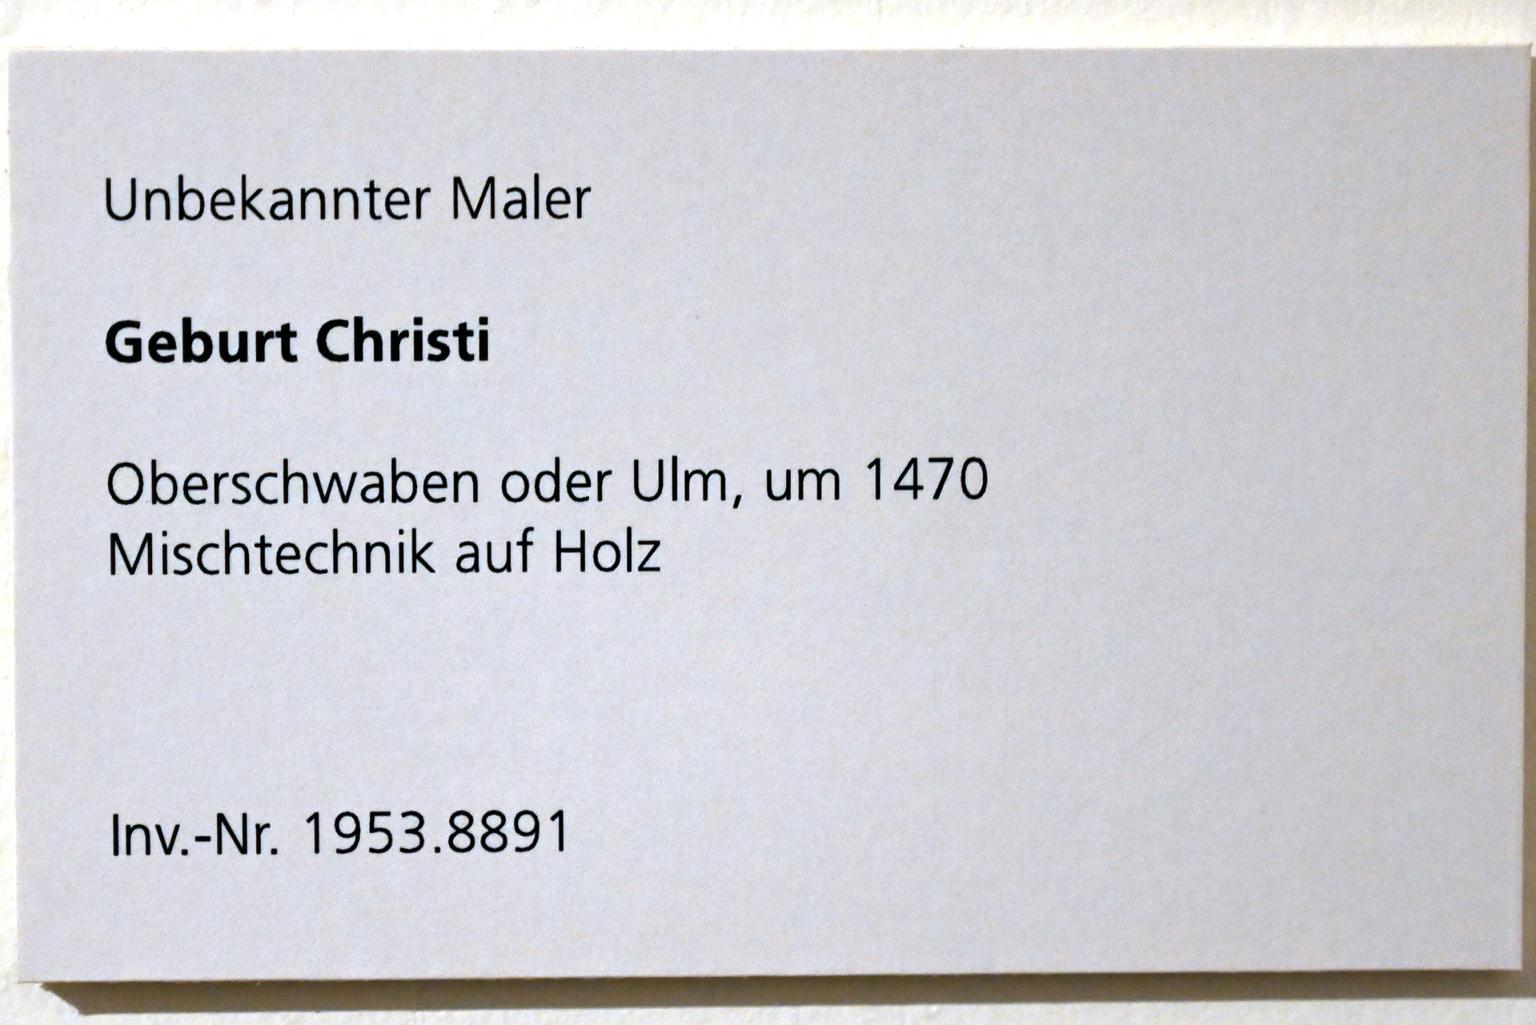 Geburt Christi, Ulm, Museum Ulm, Saal 3, um 1470, Bild 2/2